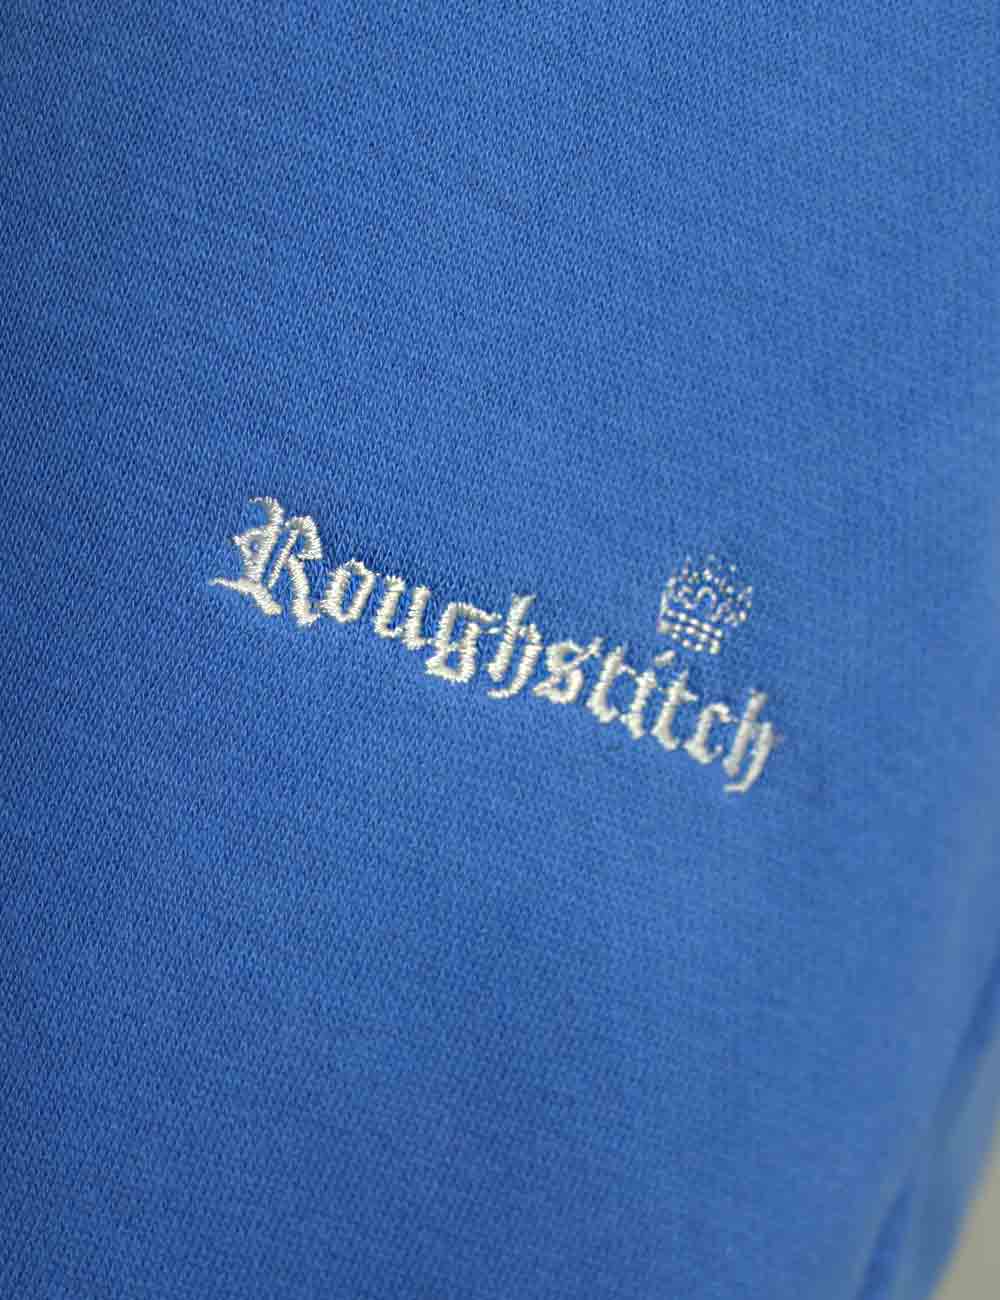 Royal Blue and Logo - Royal Blue Joggers | Roughstitch Men's Sweatpants